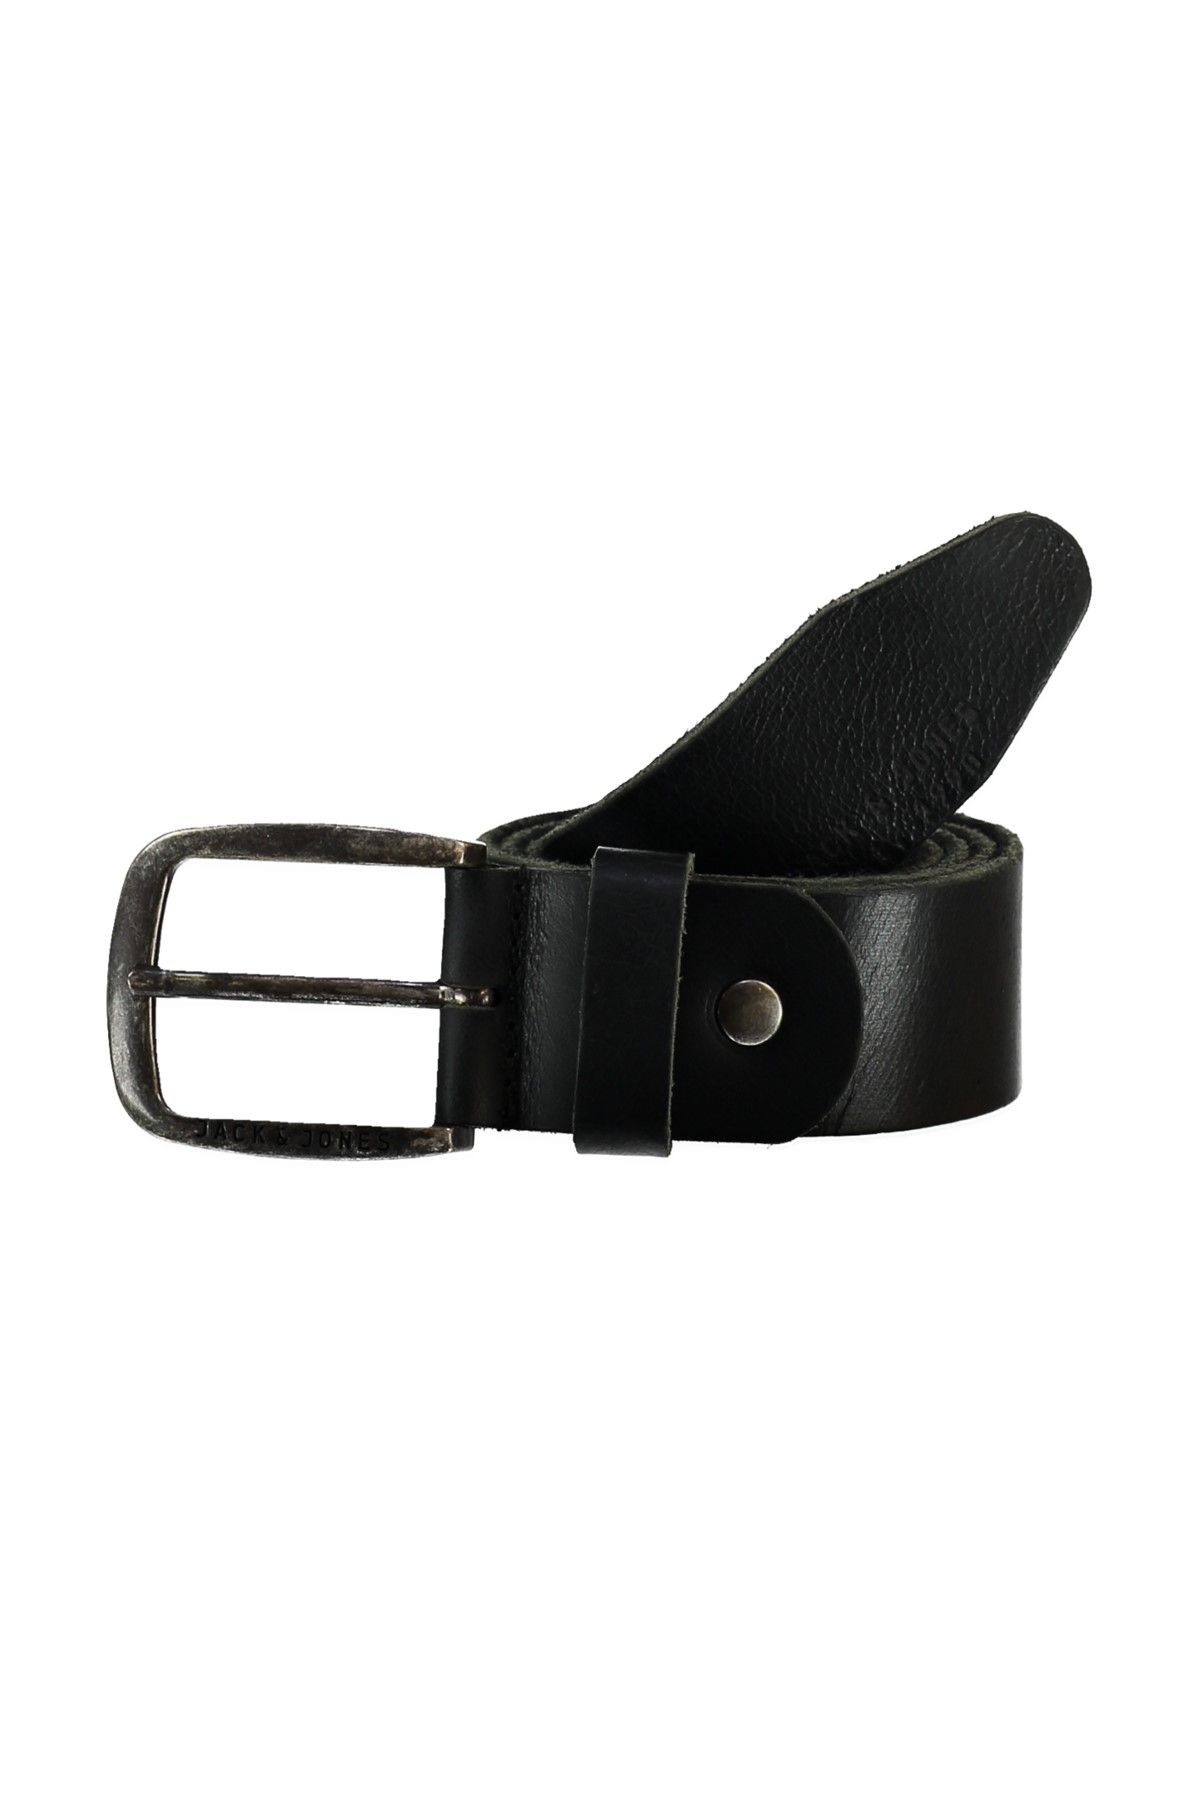 Jack & Jones Kemer - Paul Leather Belt-12111286